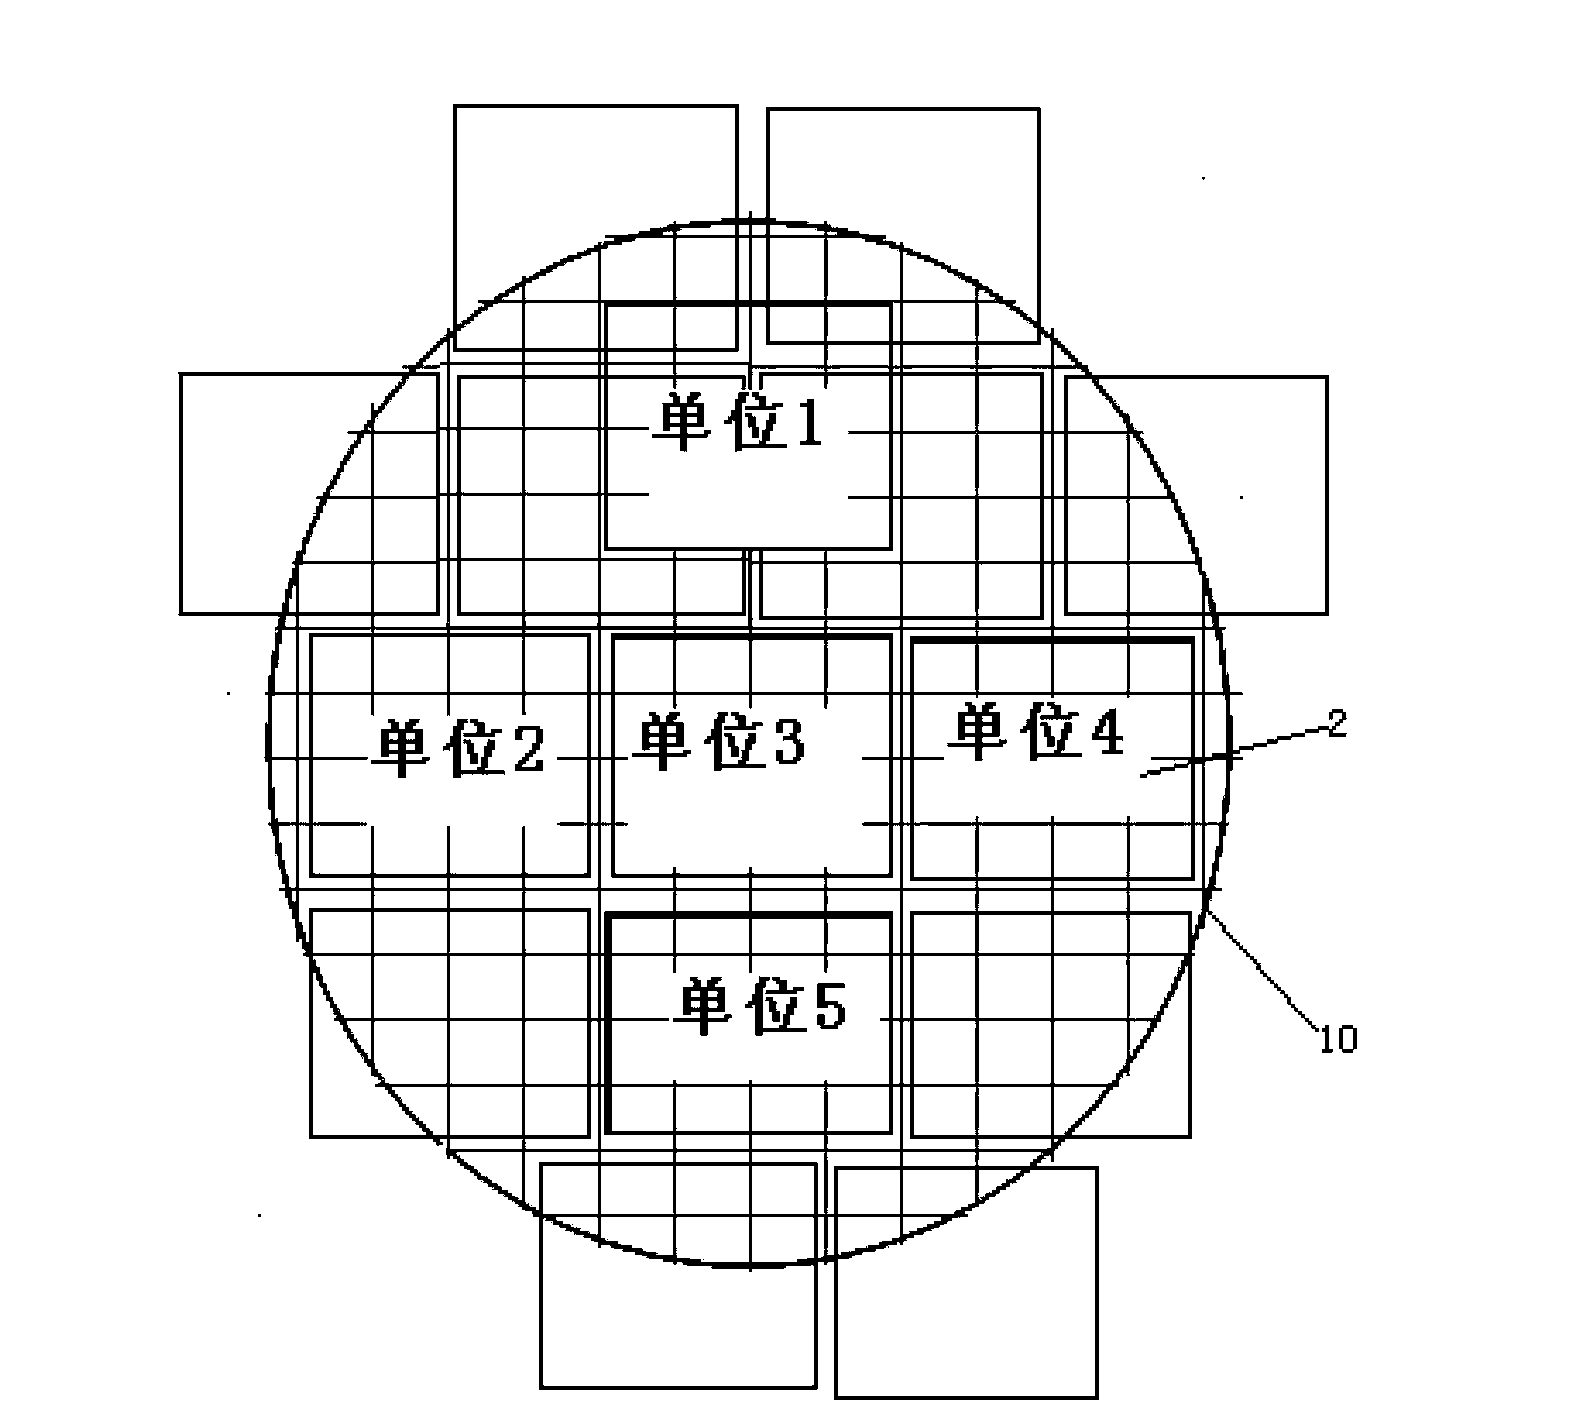 Adjustment method for parameters of chips on wafer